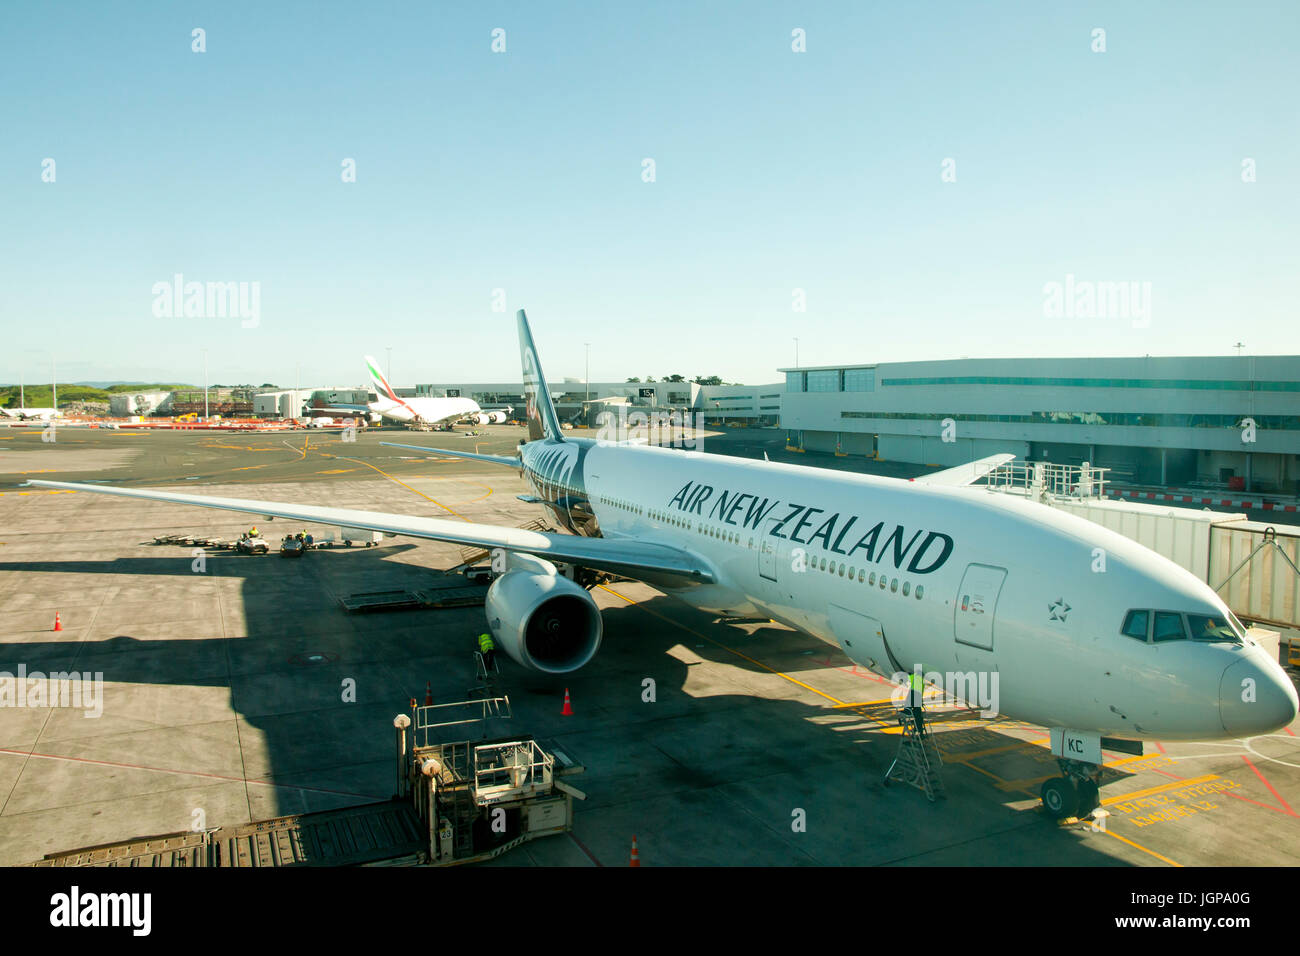 AUCKLAND, Neuseeland - 20. Mai 2017: Commercial Air New Zealand Flugzeug in Auckland Airport begründet; der größte Flughafen in Neuseeland Stockfoto